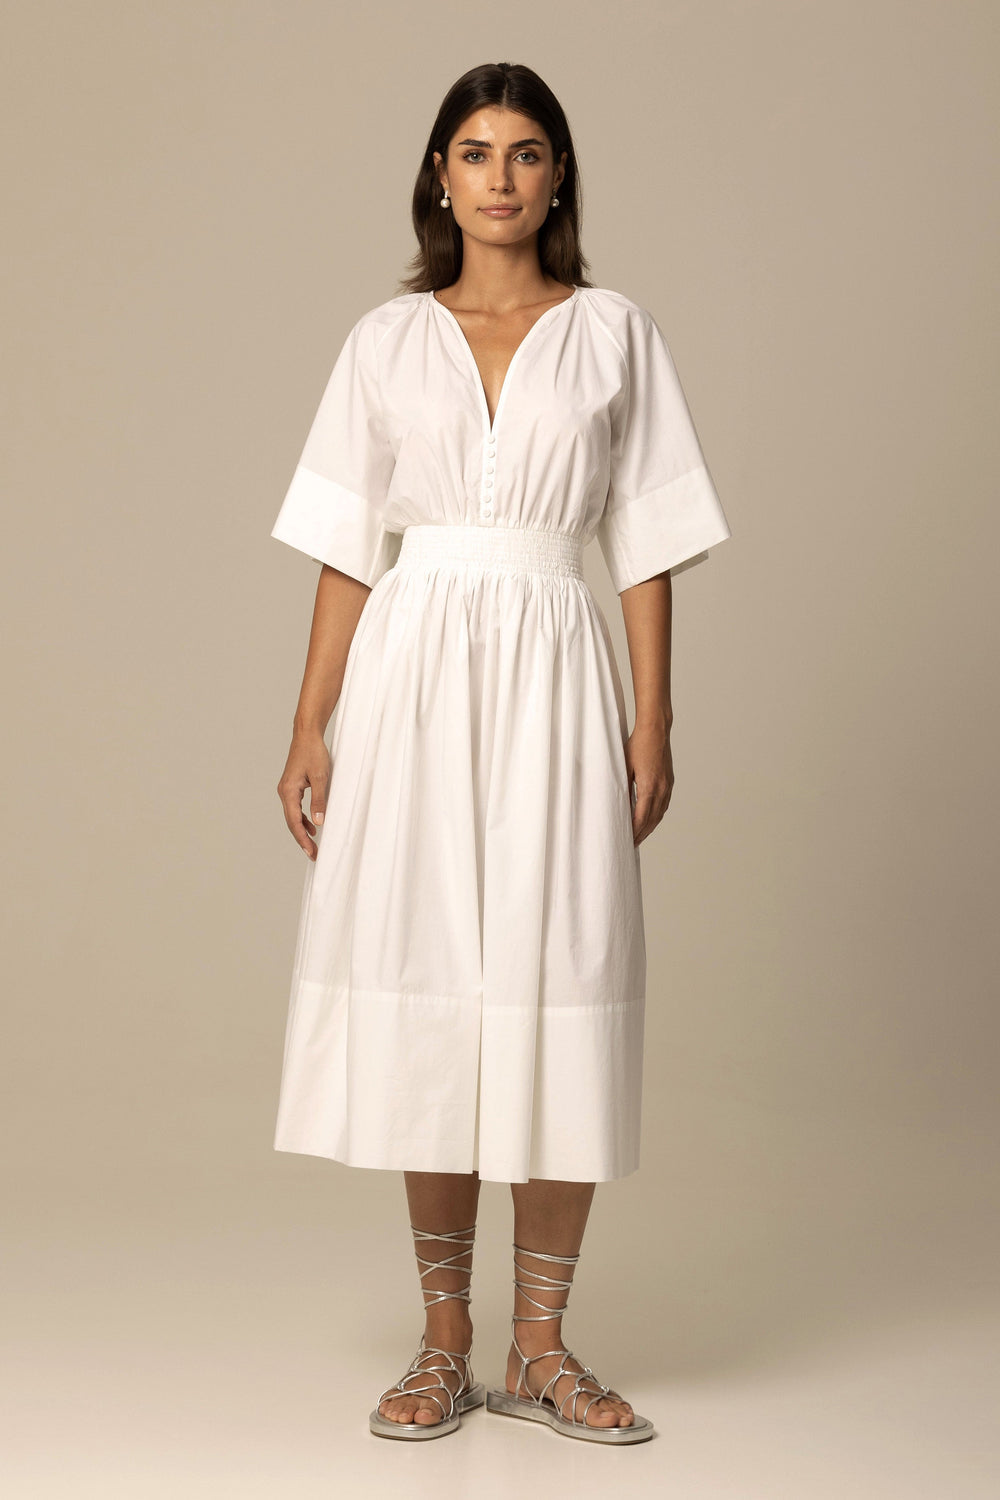 ANIA ORGANIC COTTON SHIRT DRESS IN WHITE